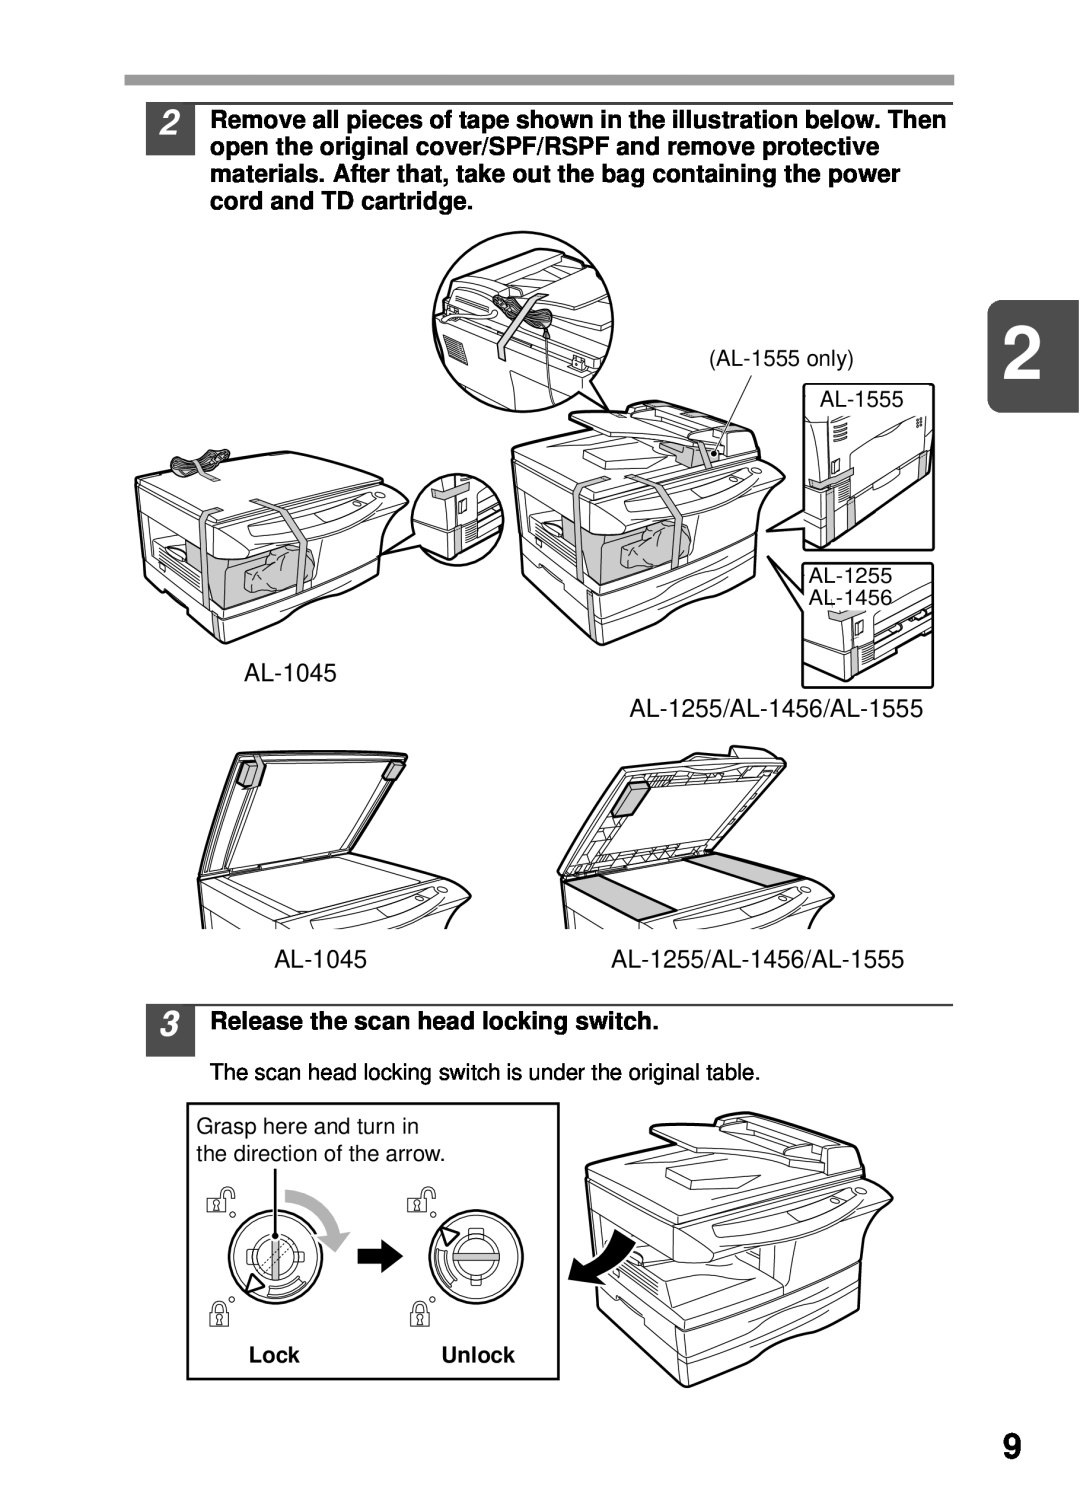 Sharp AL-1255, AL-1555, AL-1456, AL-1045 operation manual Release the scan head locking switch 